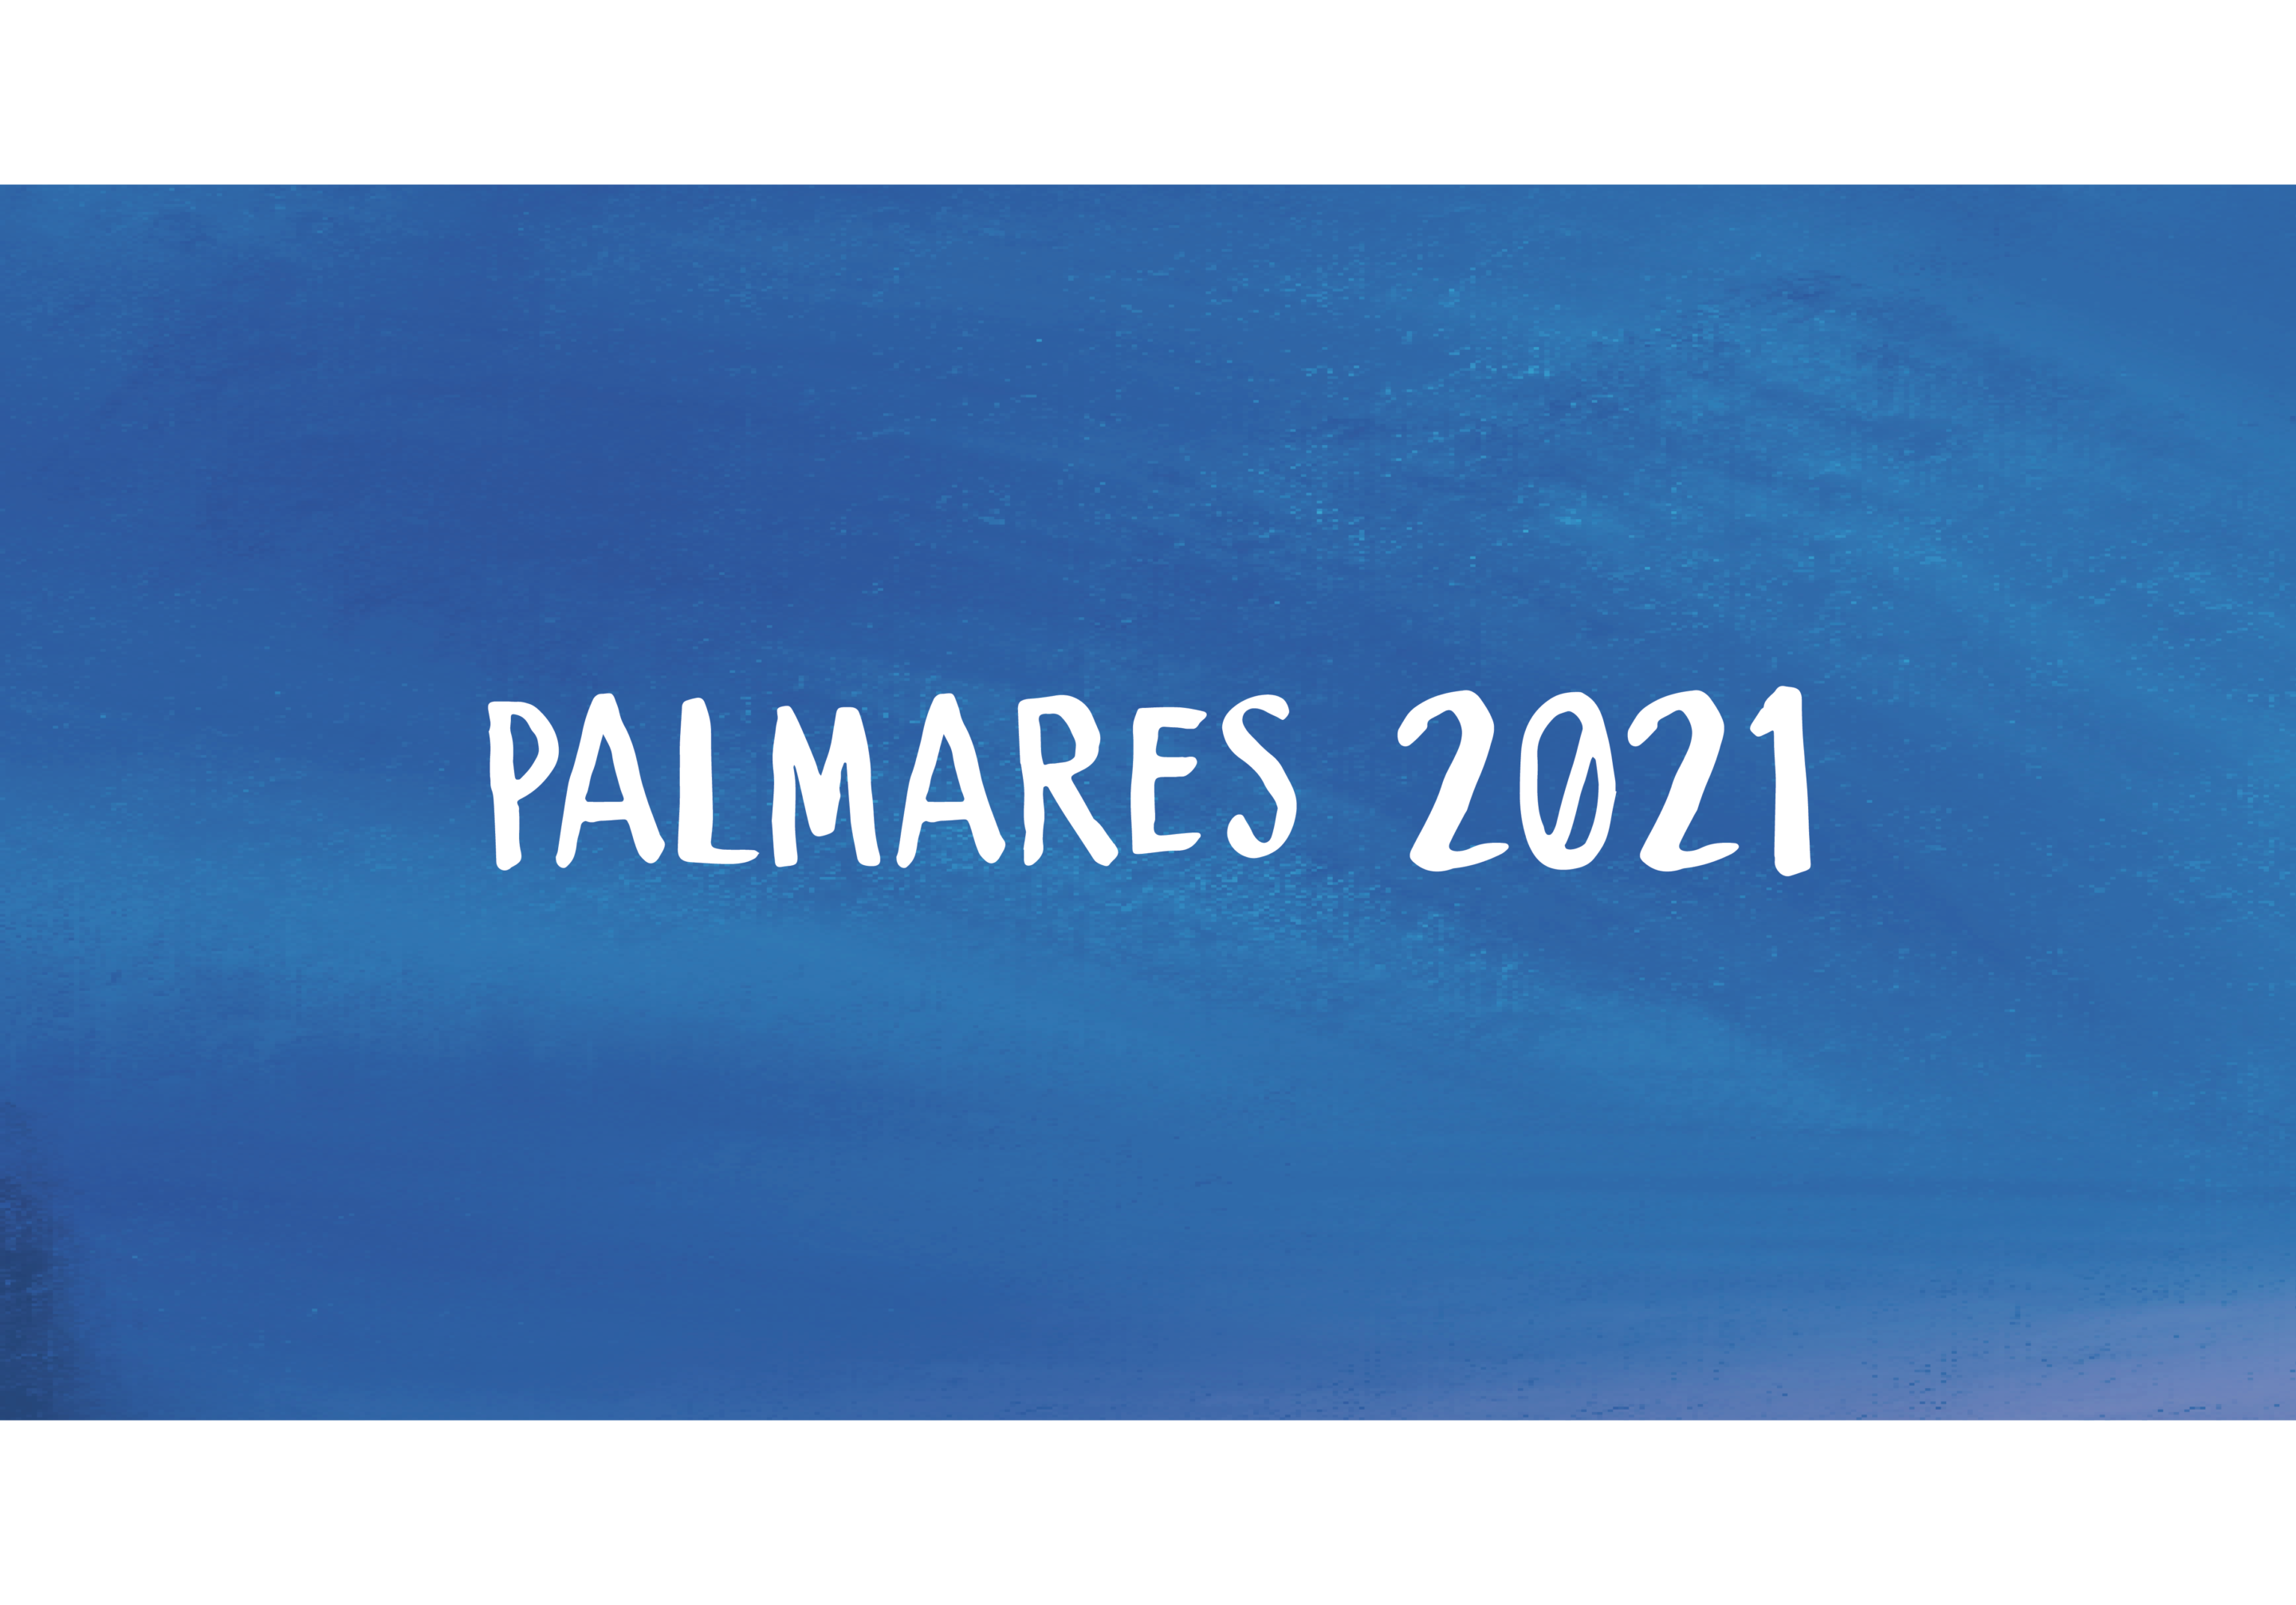 Palmarès 2021